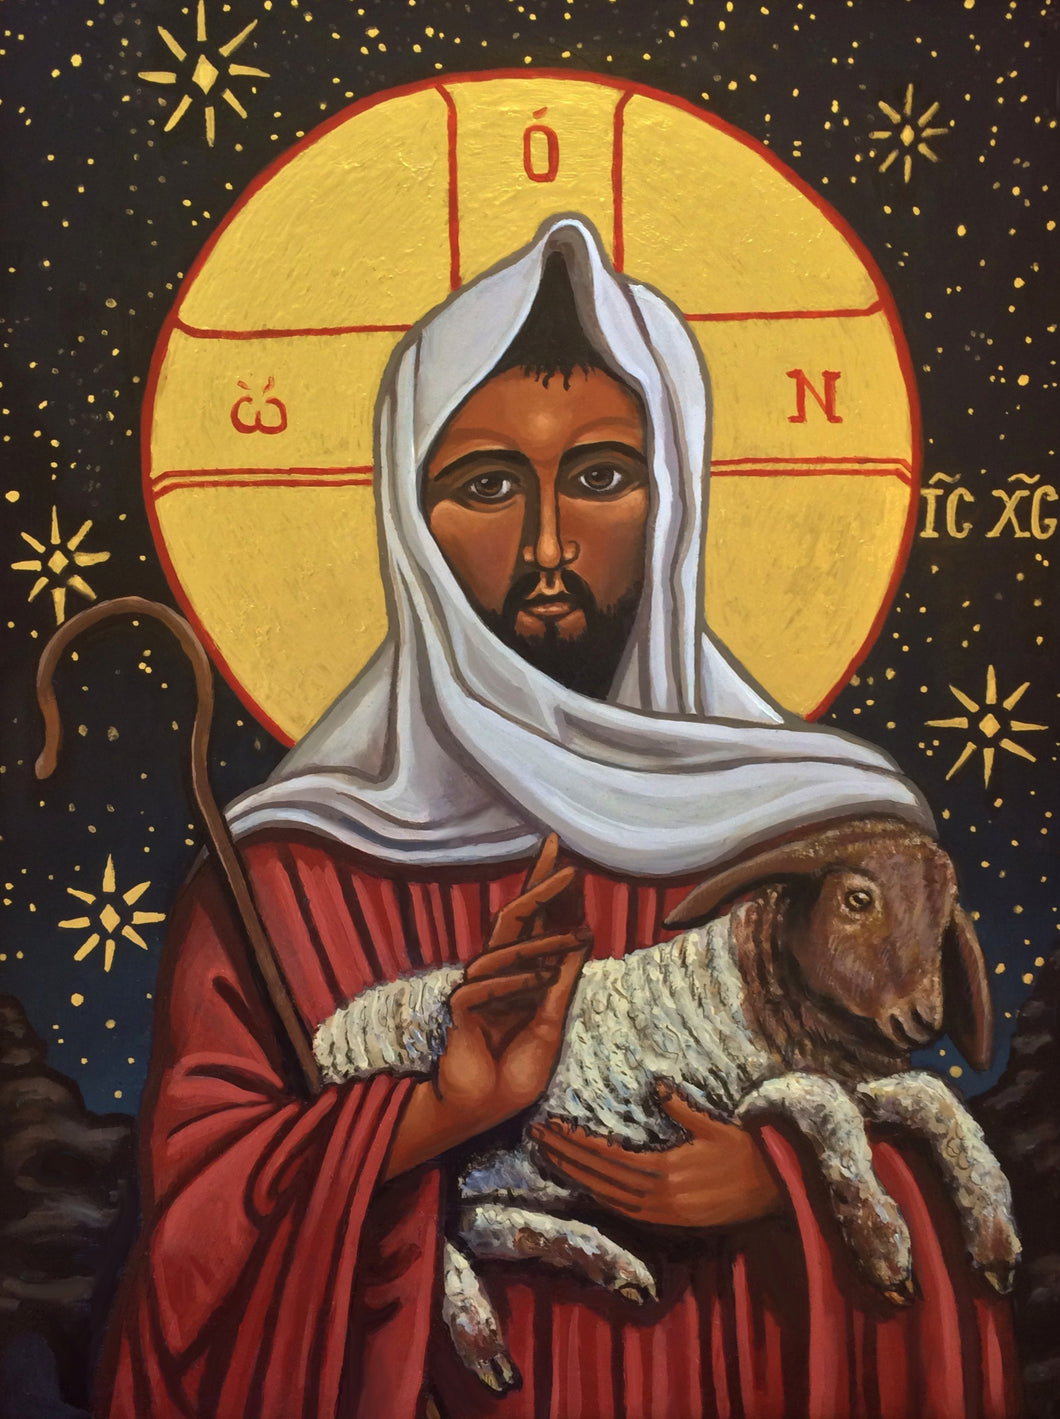 The Good Shepherd Digital Image